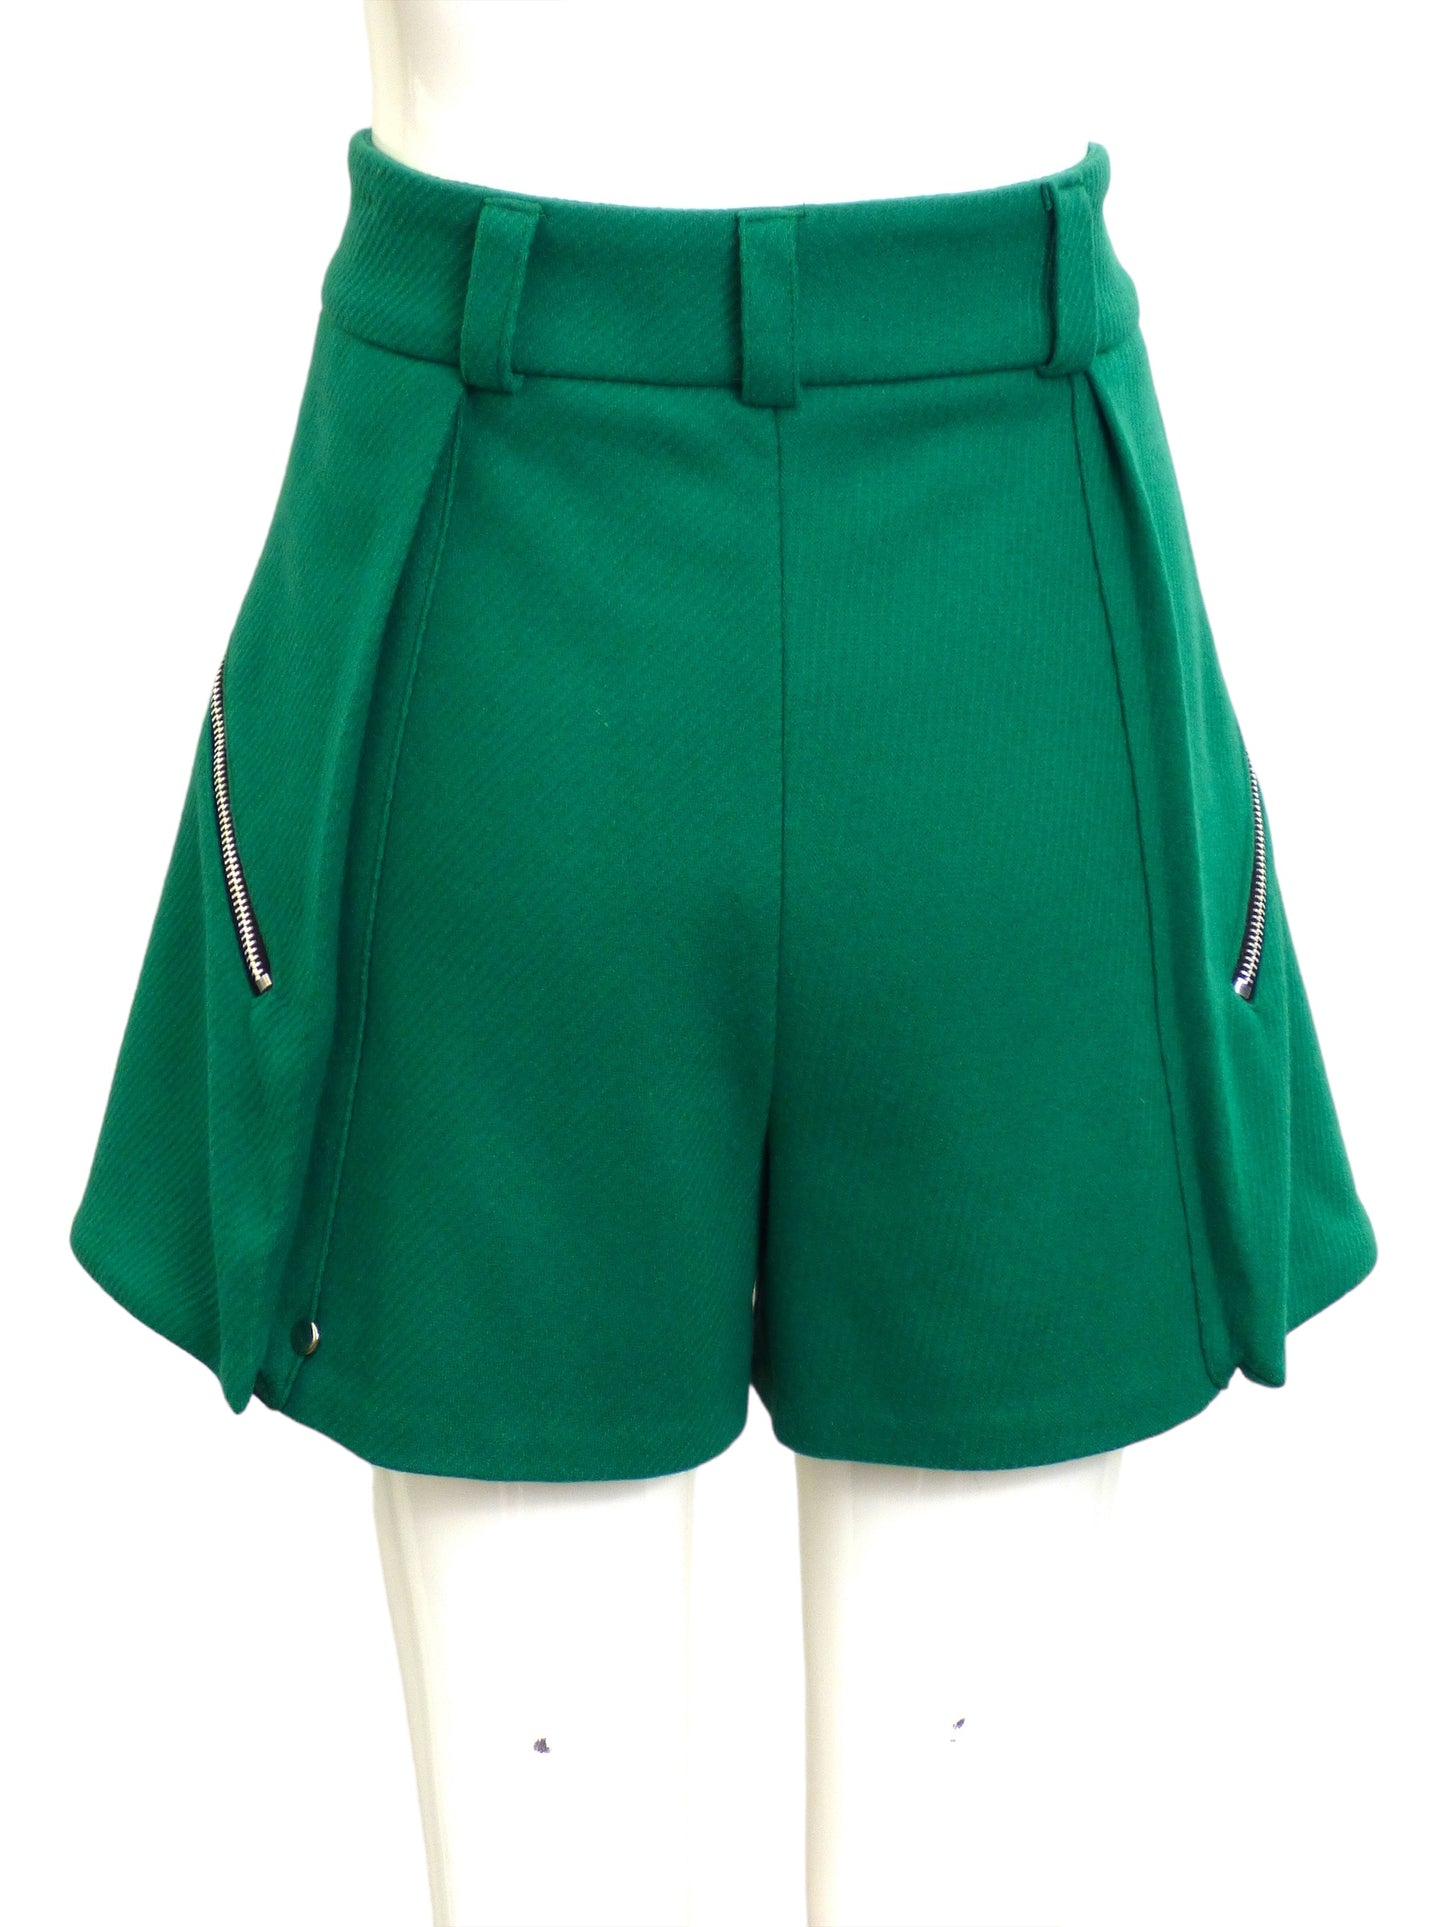 JC de CASTELBAJAC- NWT Green Wool Shorts, Size 8